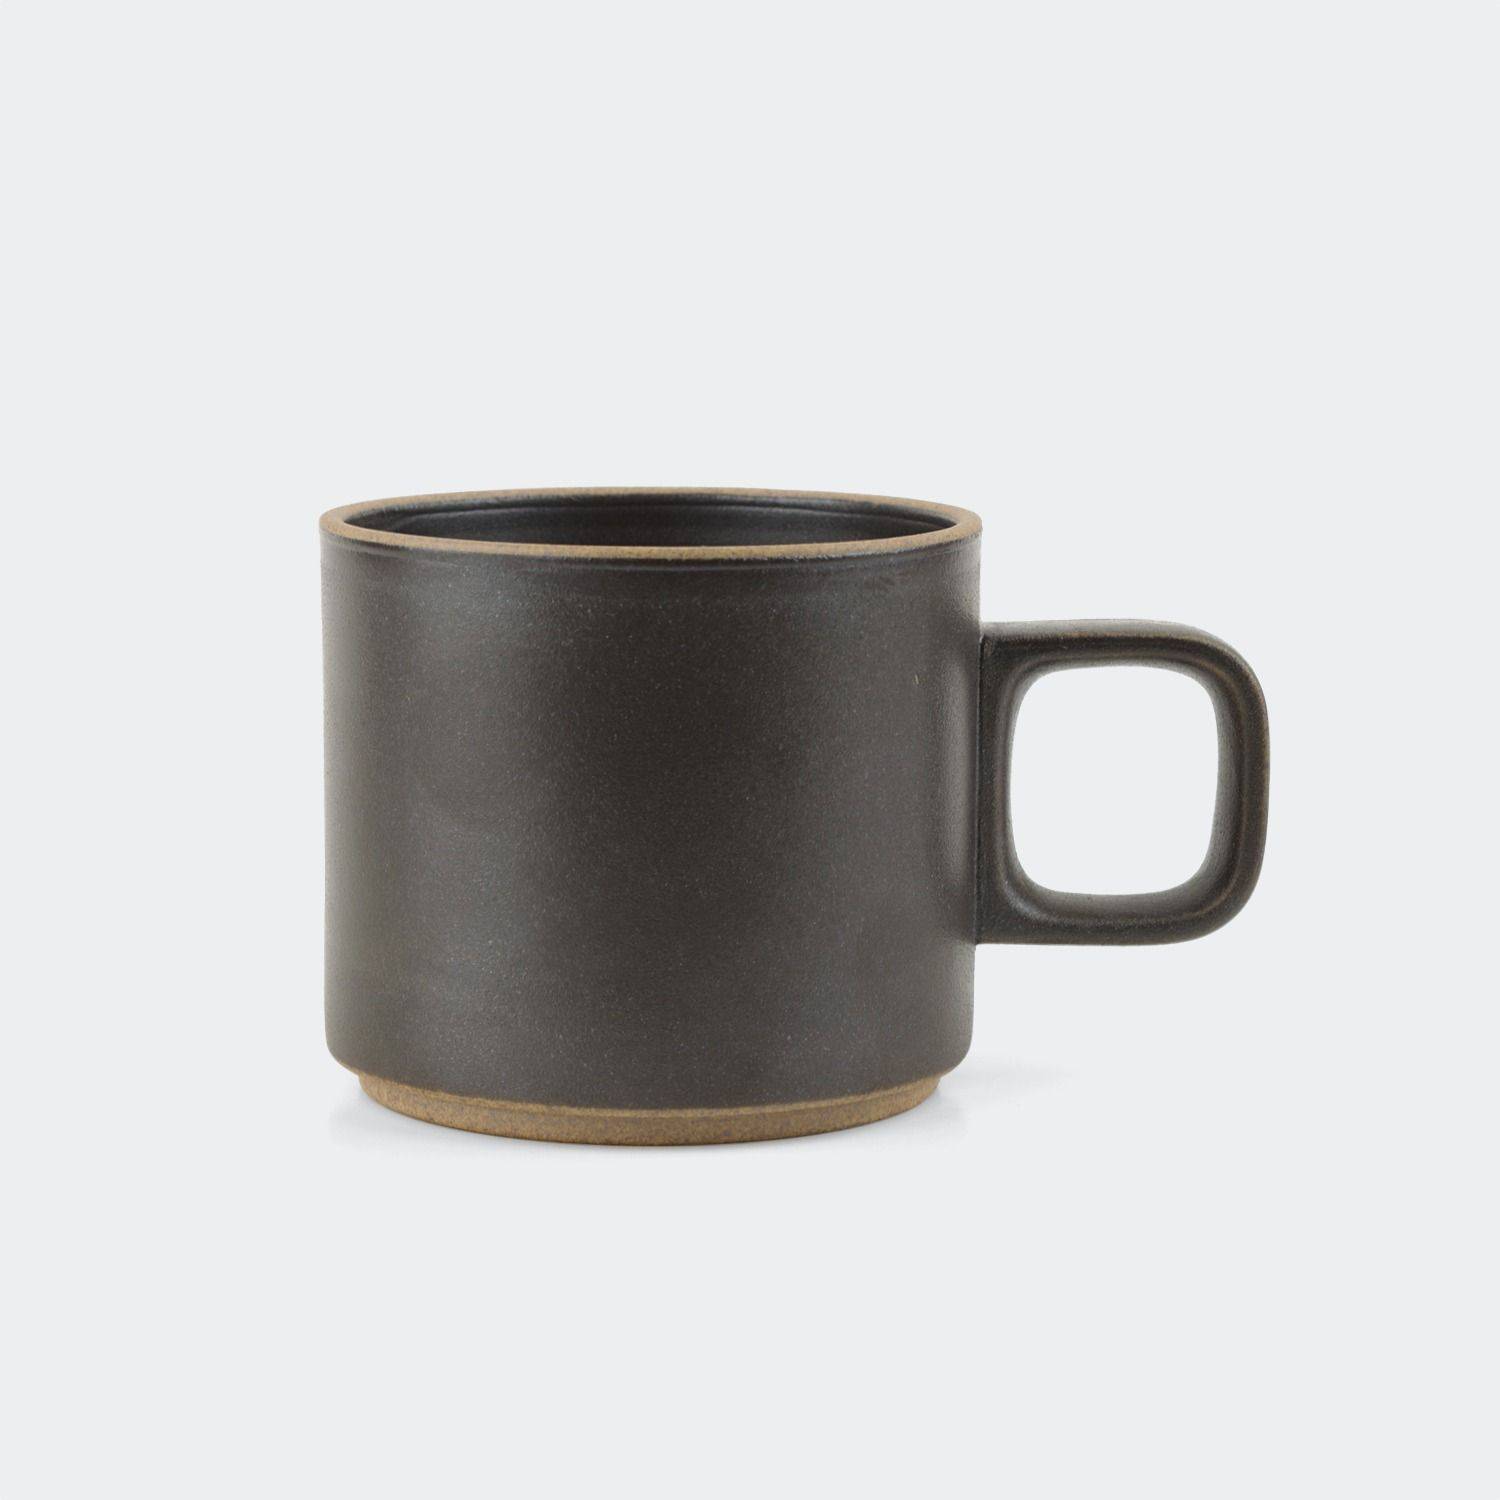 Hasami Porcelain Mug in Black 11 oz. - KANSO #select size_11 oz.